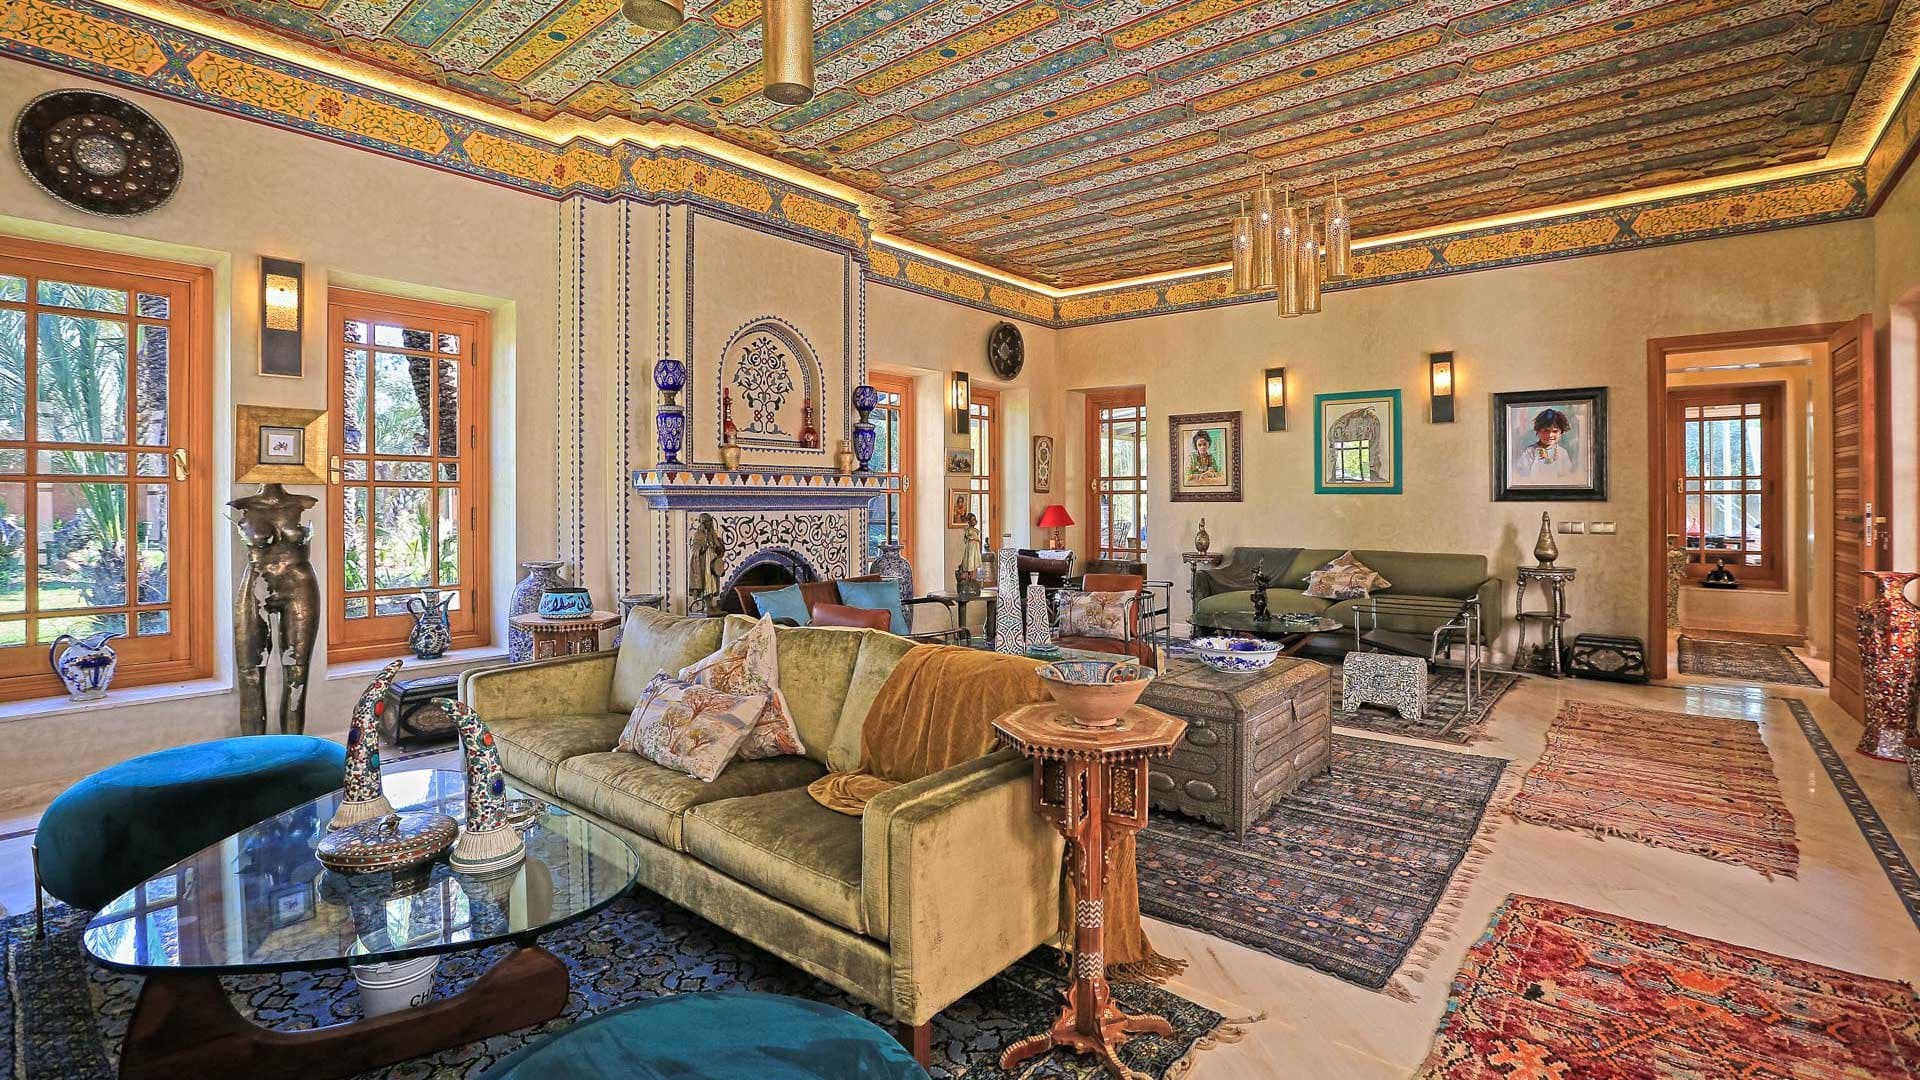 8 Bedroom Villa For Sale Marrakech Lp08726 227959bbe1ded600.jpg